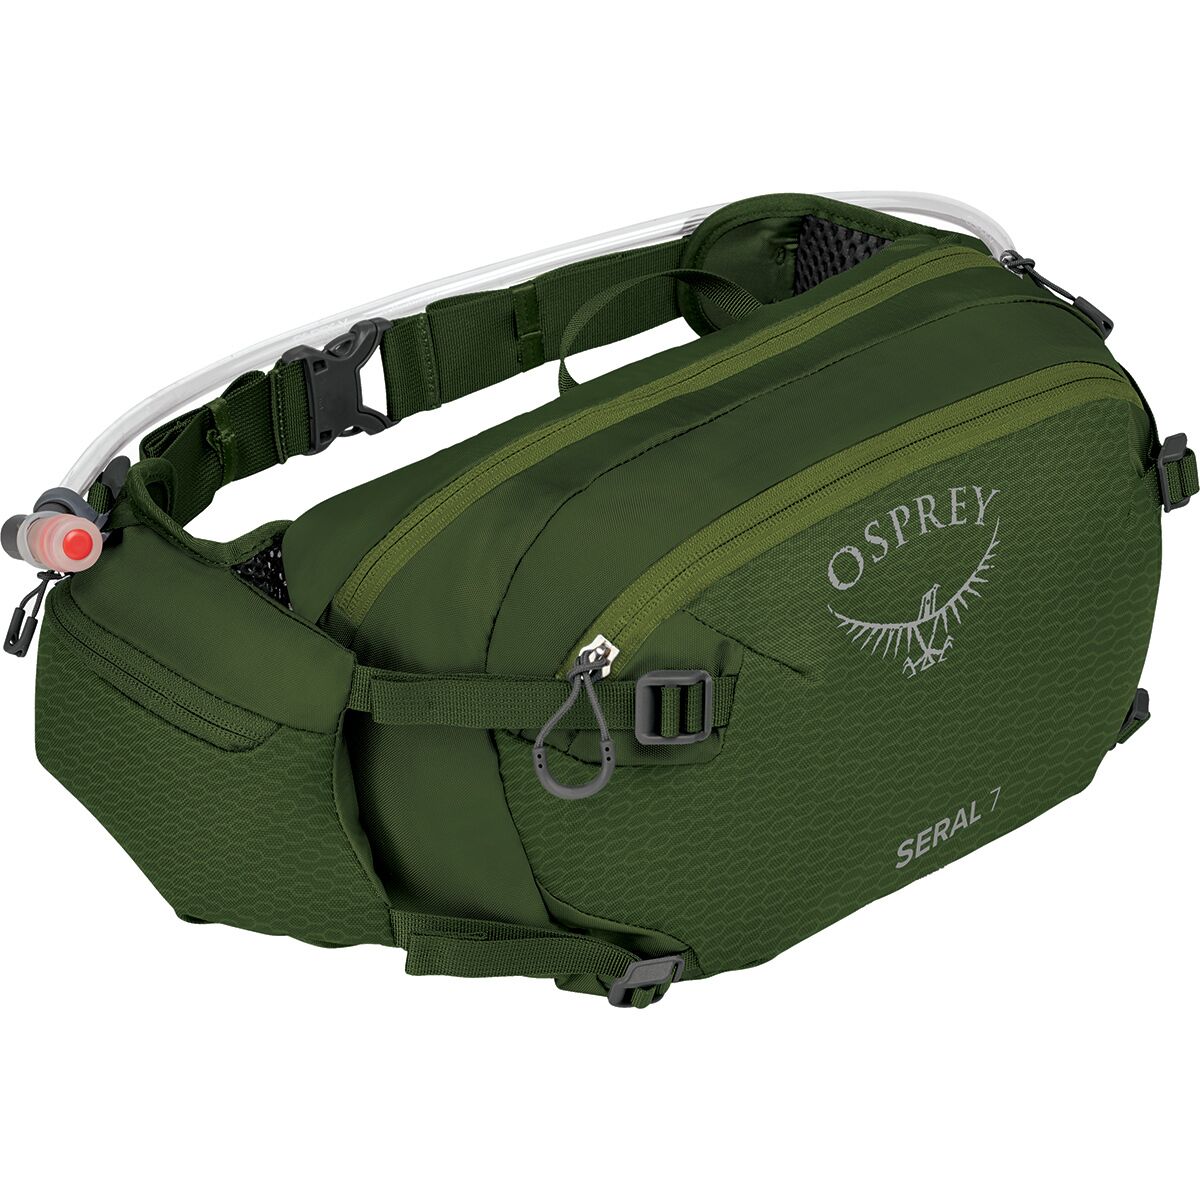 Osprey Packs Seral 7L Pack